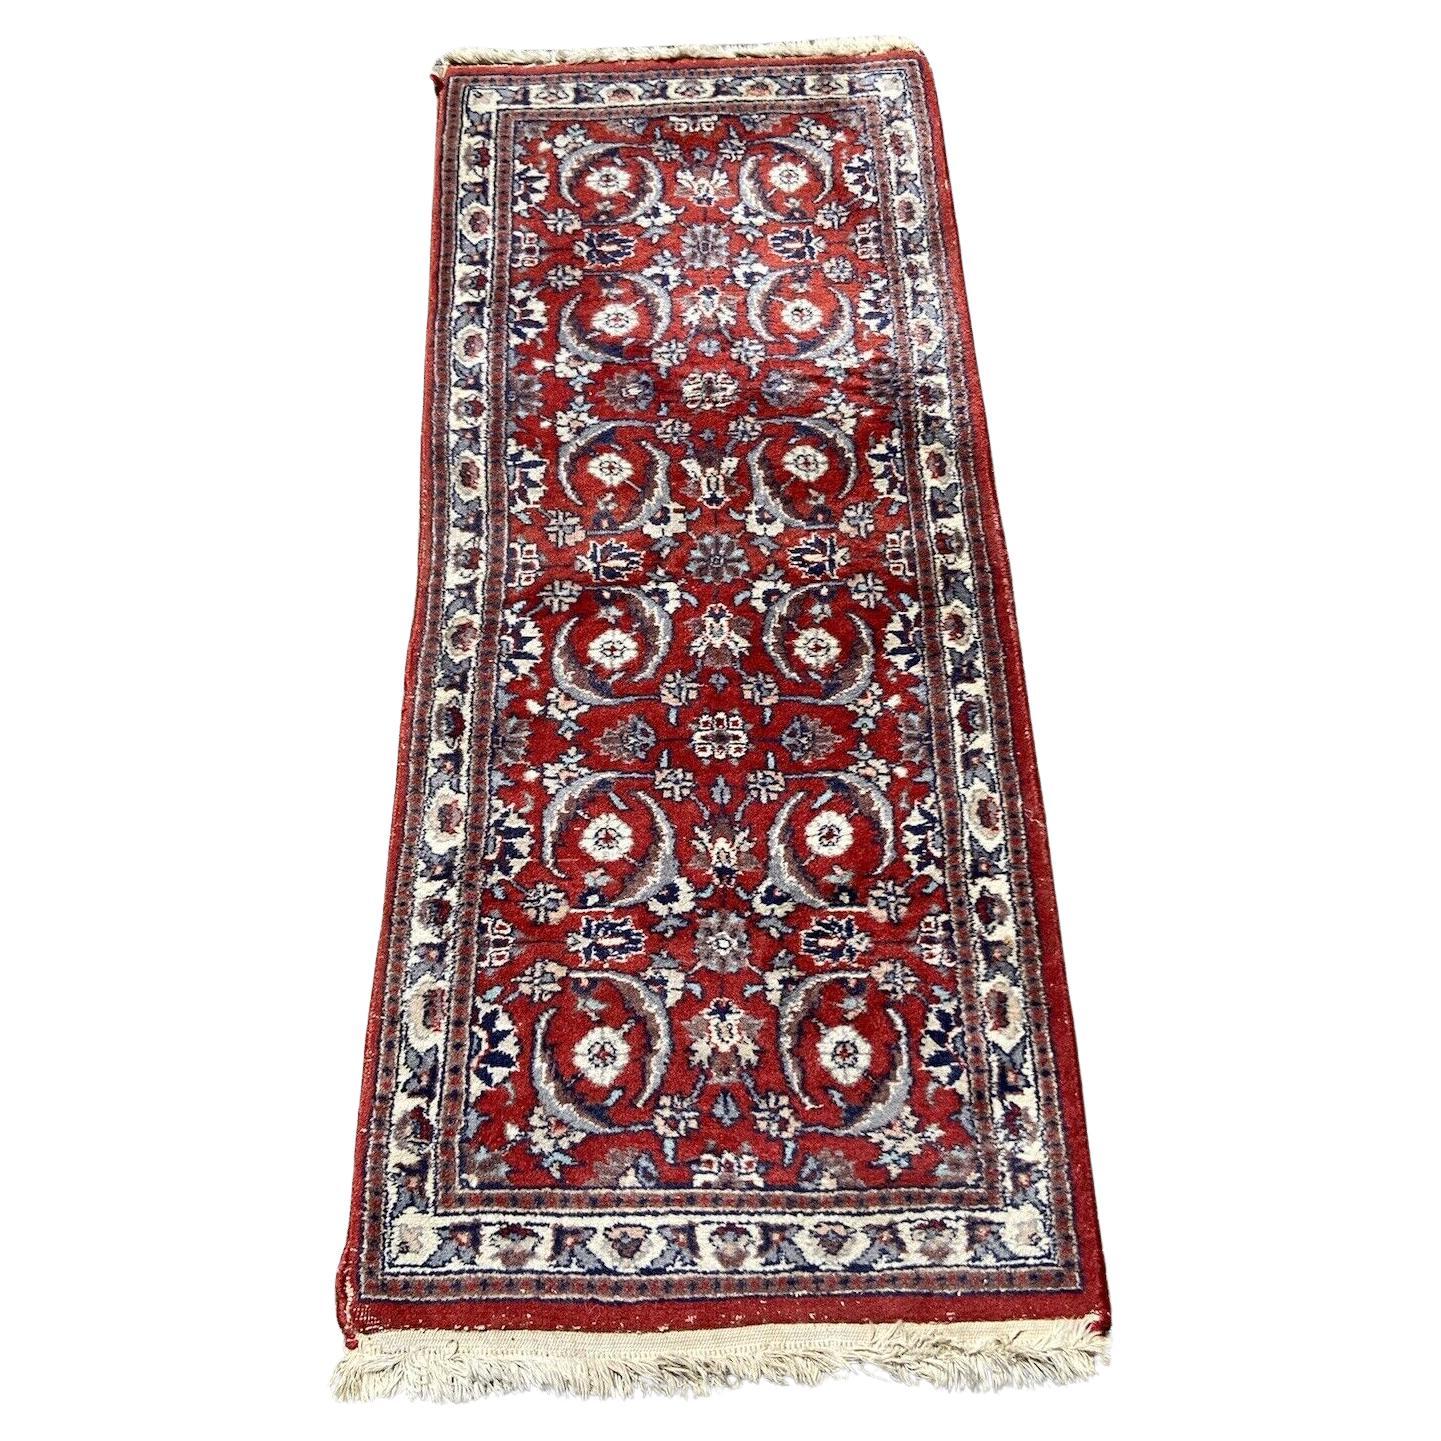 Handmade Vintage Persian Style Kashan Rug 1.5' x 3.7', 1970s - 1S21